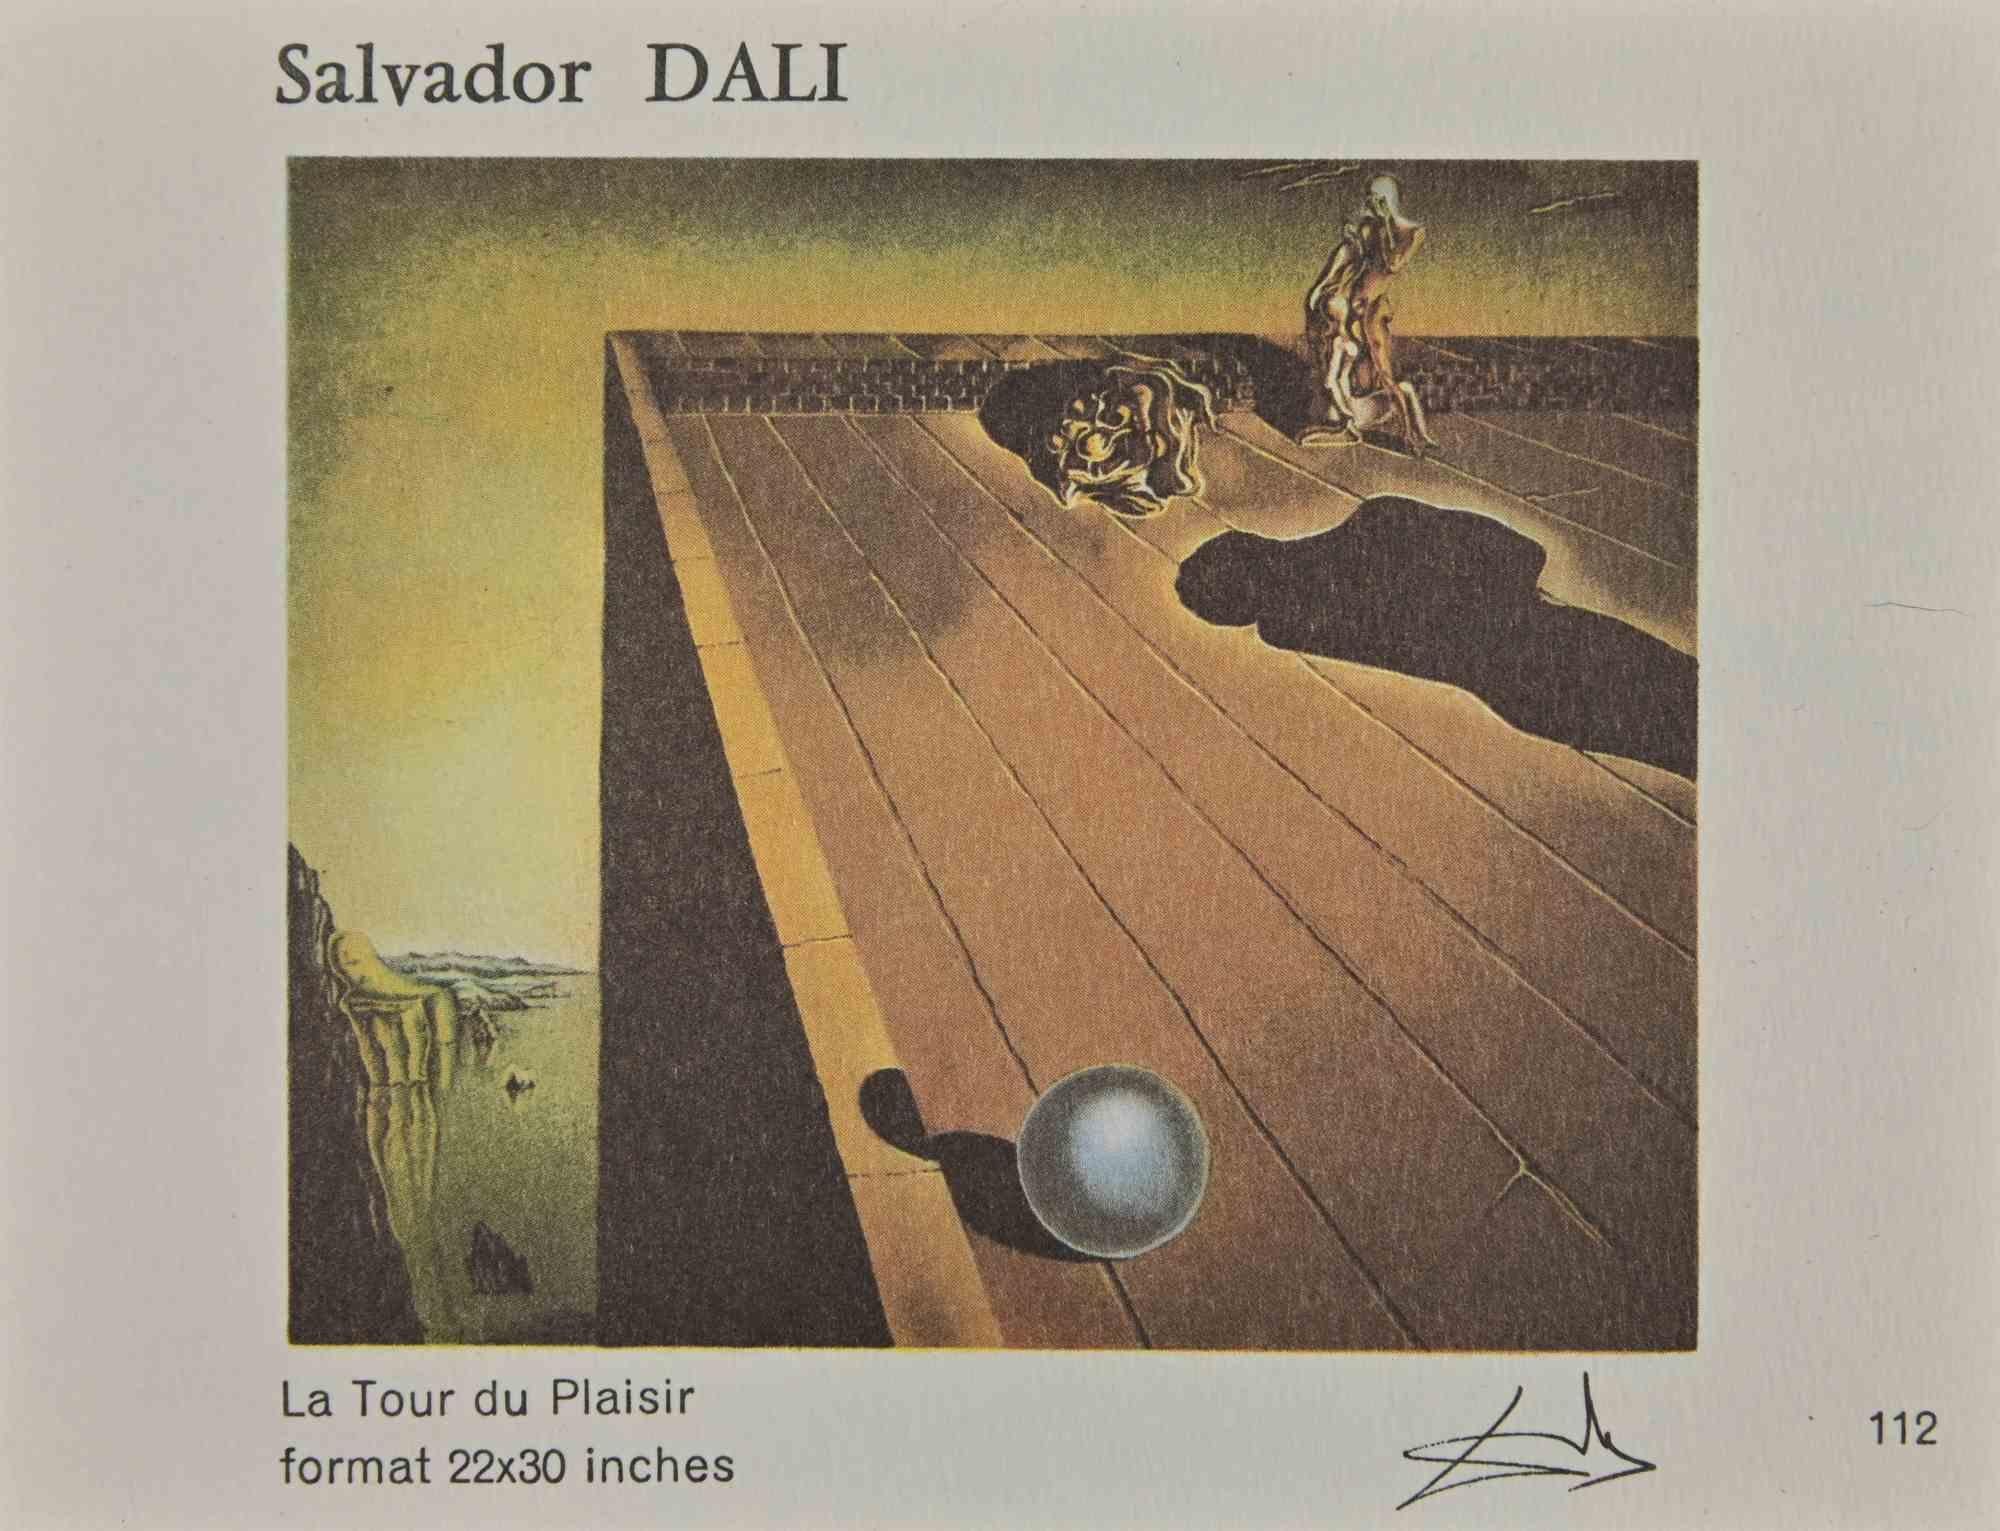 Collection of Vintage Cards After Salvador Dalì - 1980s For Sale 1